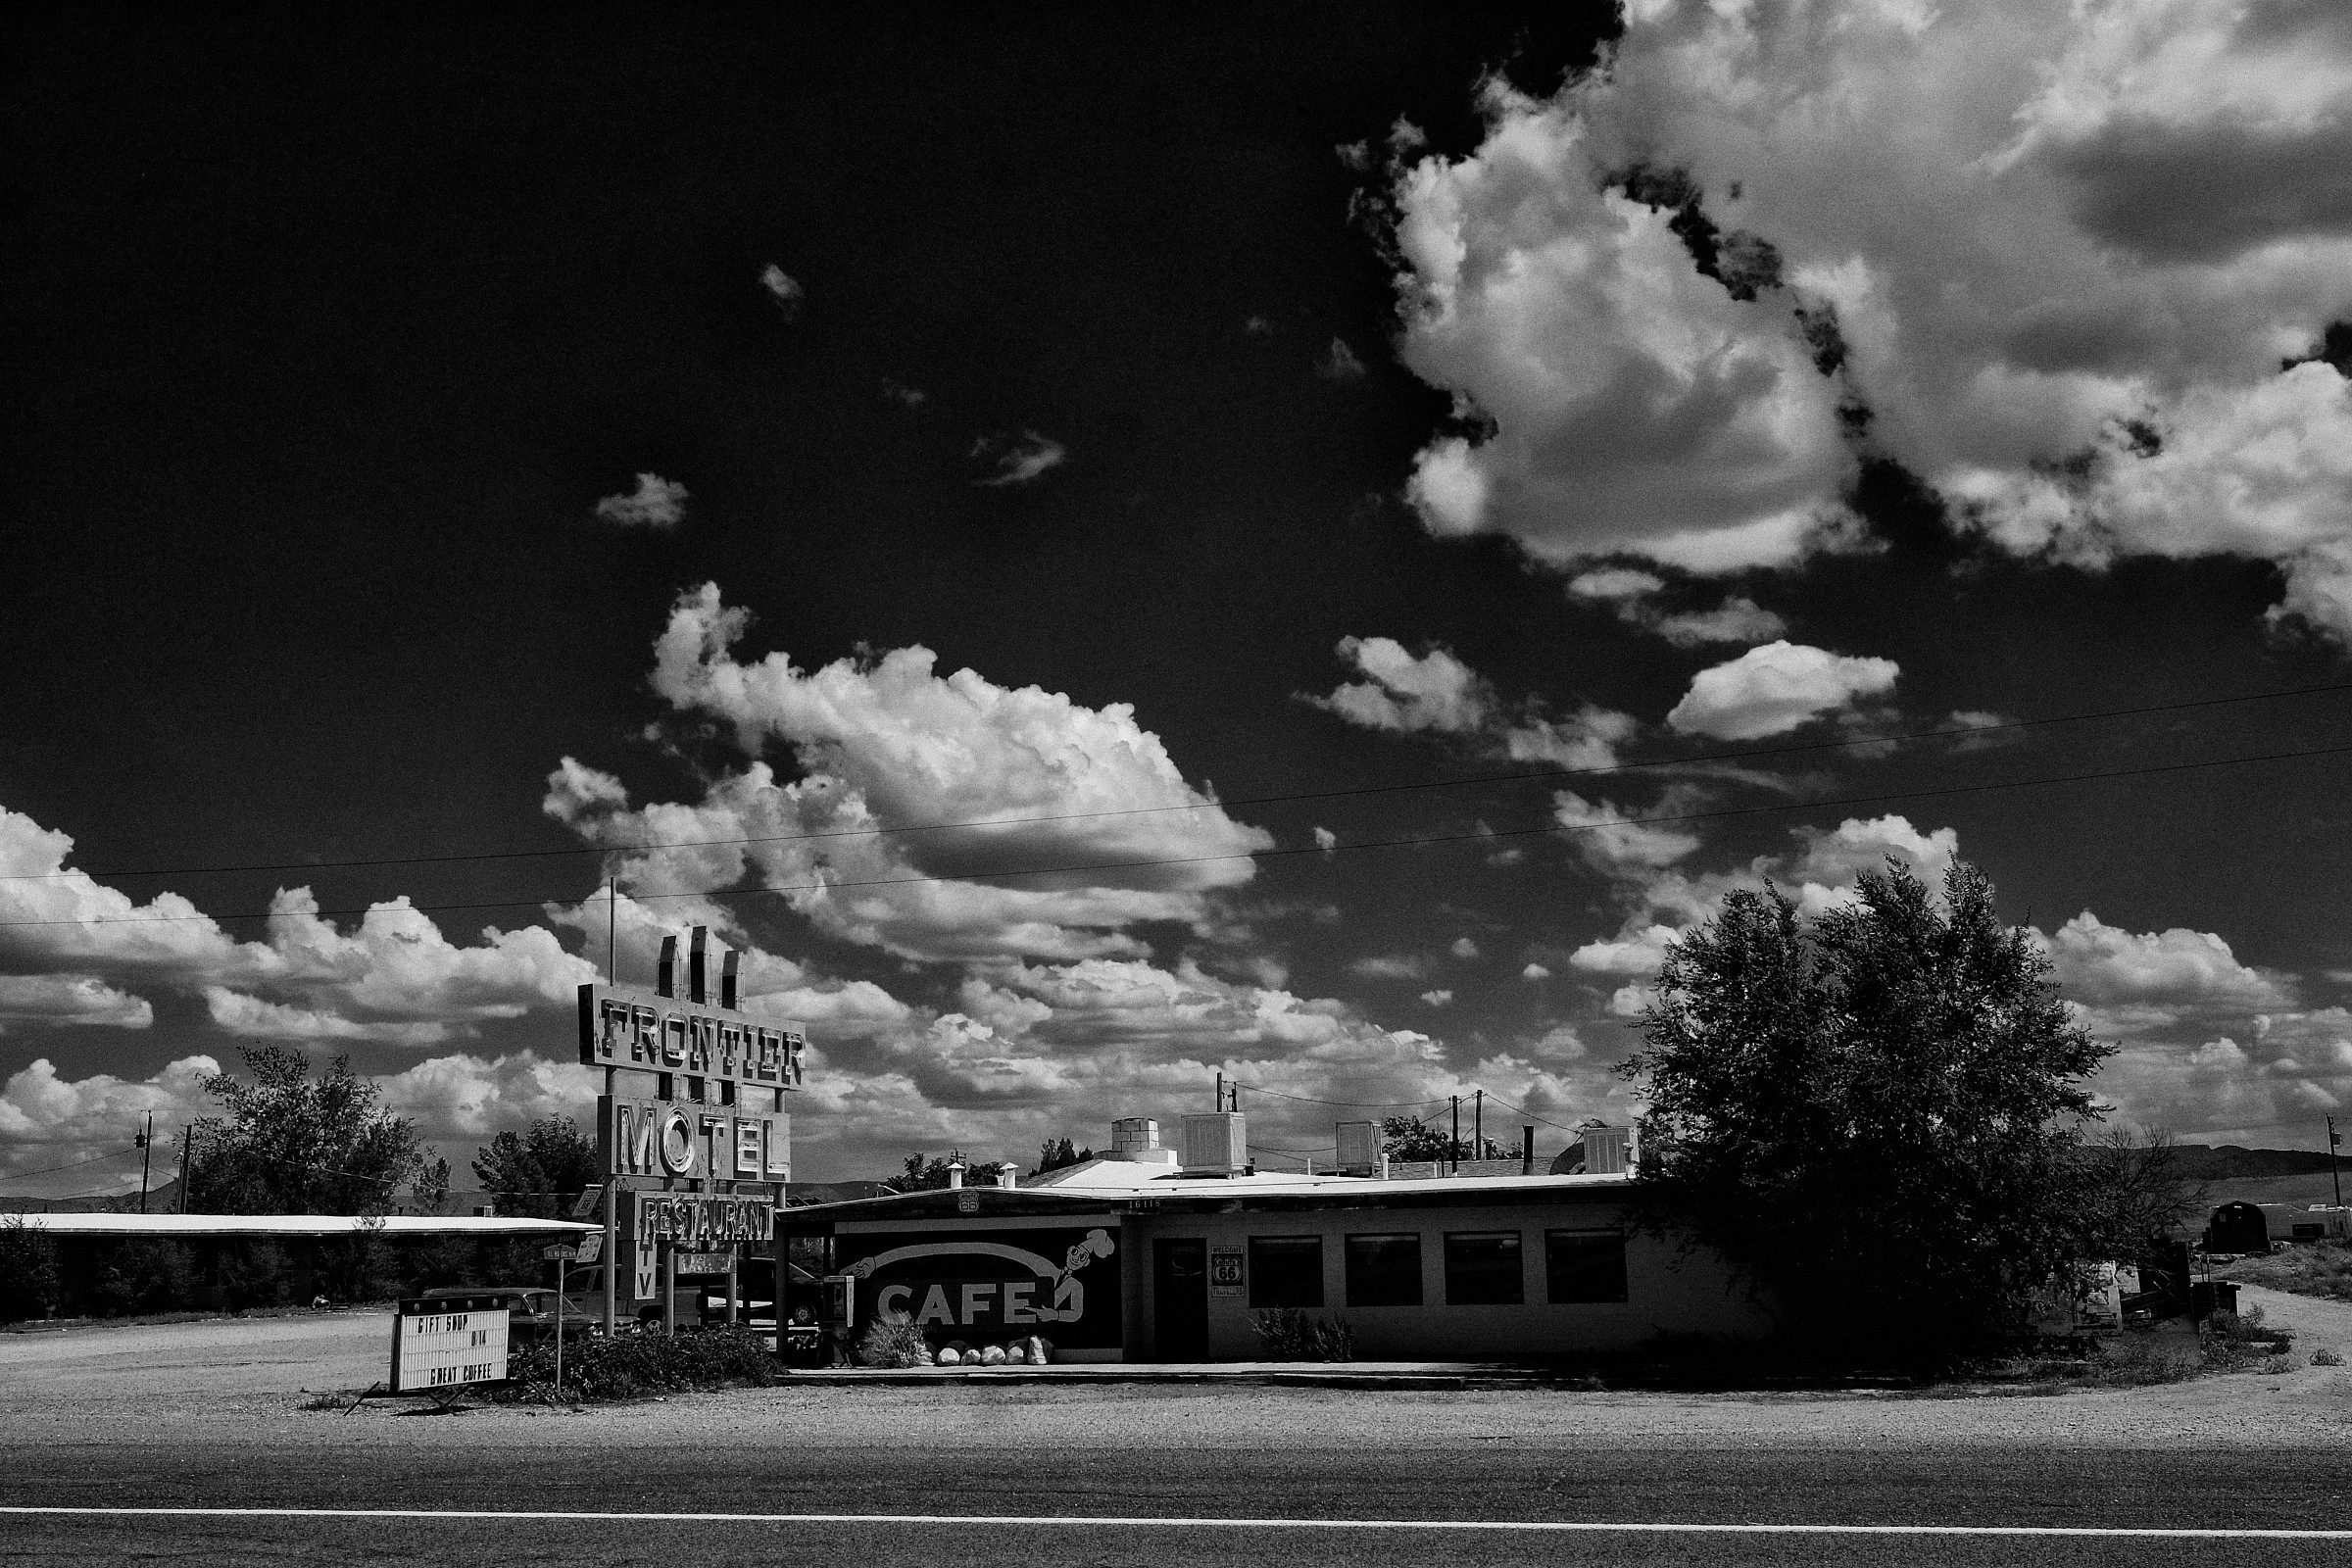 Frontier Motel, Arizona 2014 - Route 66...